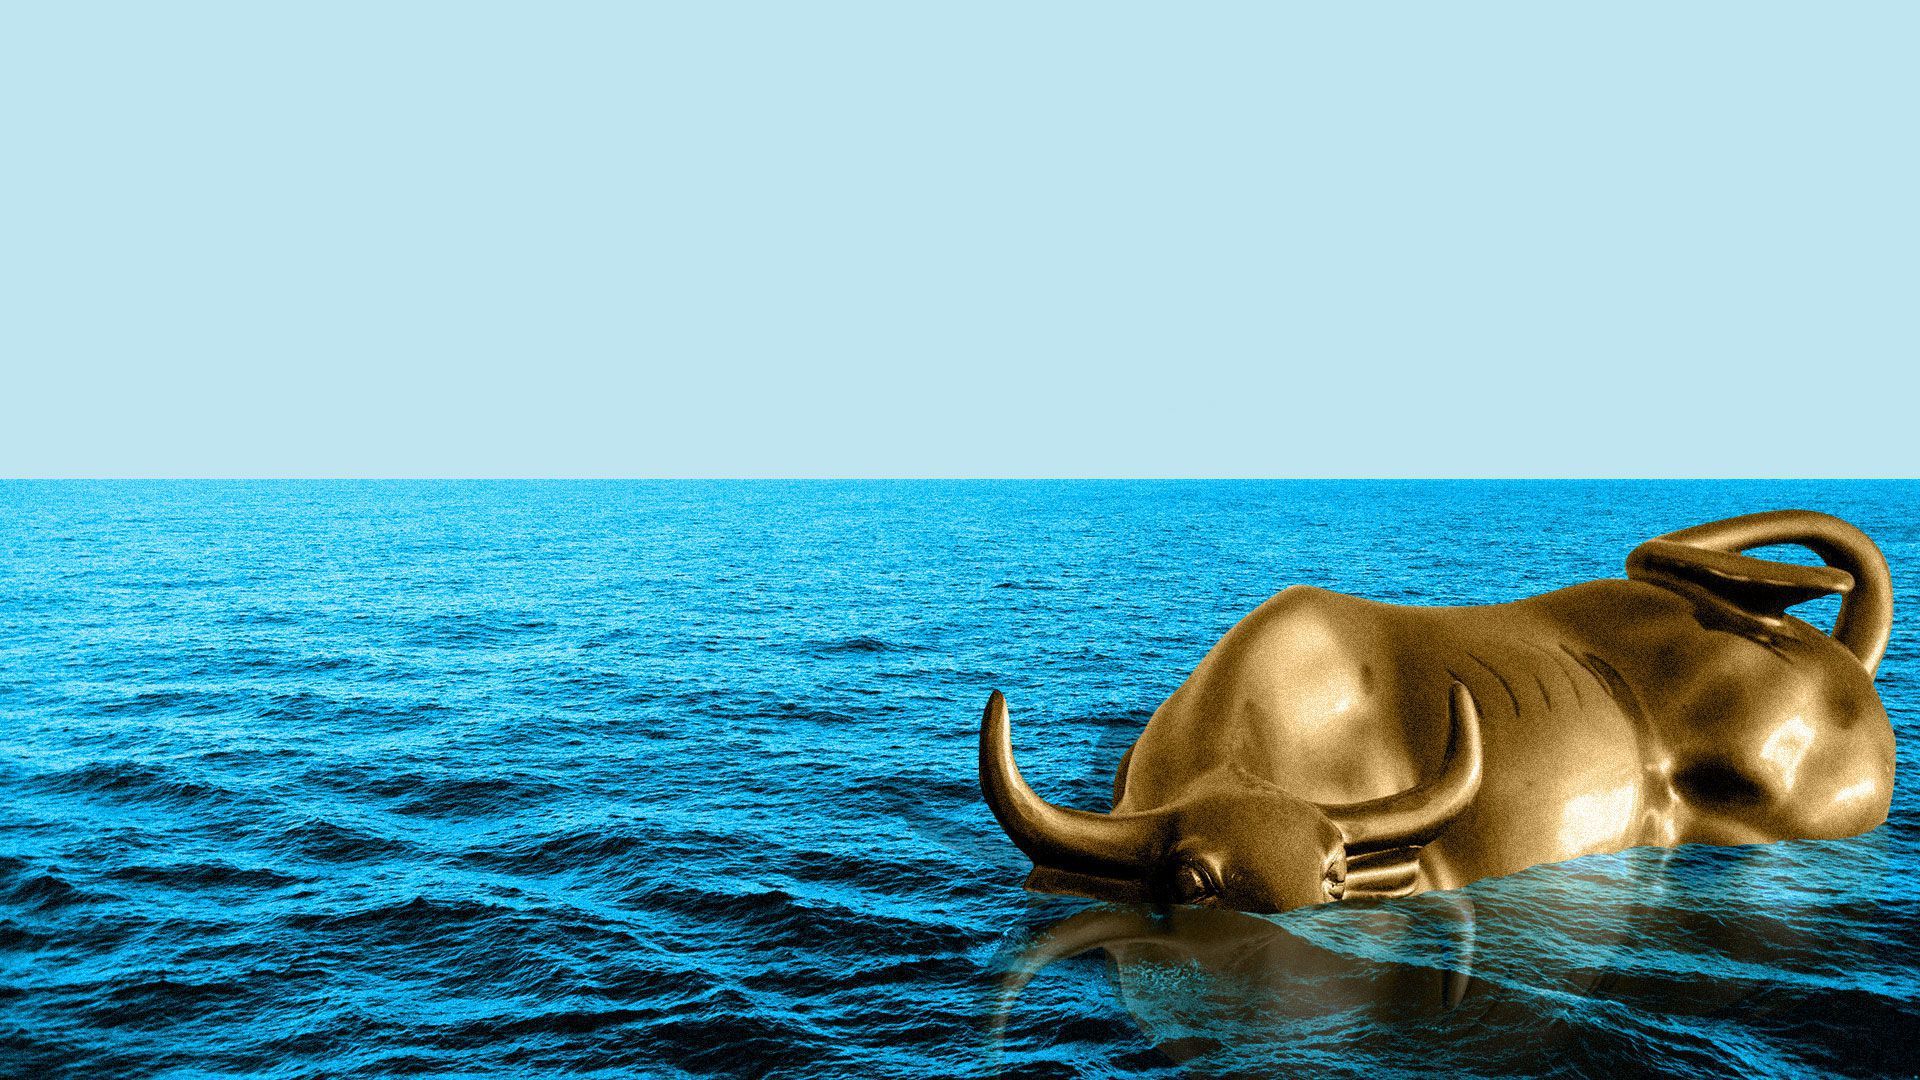 a golden bull in the ocean